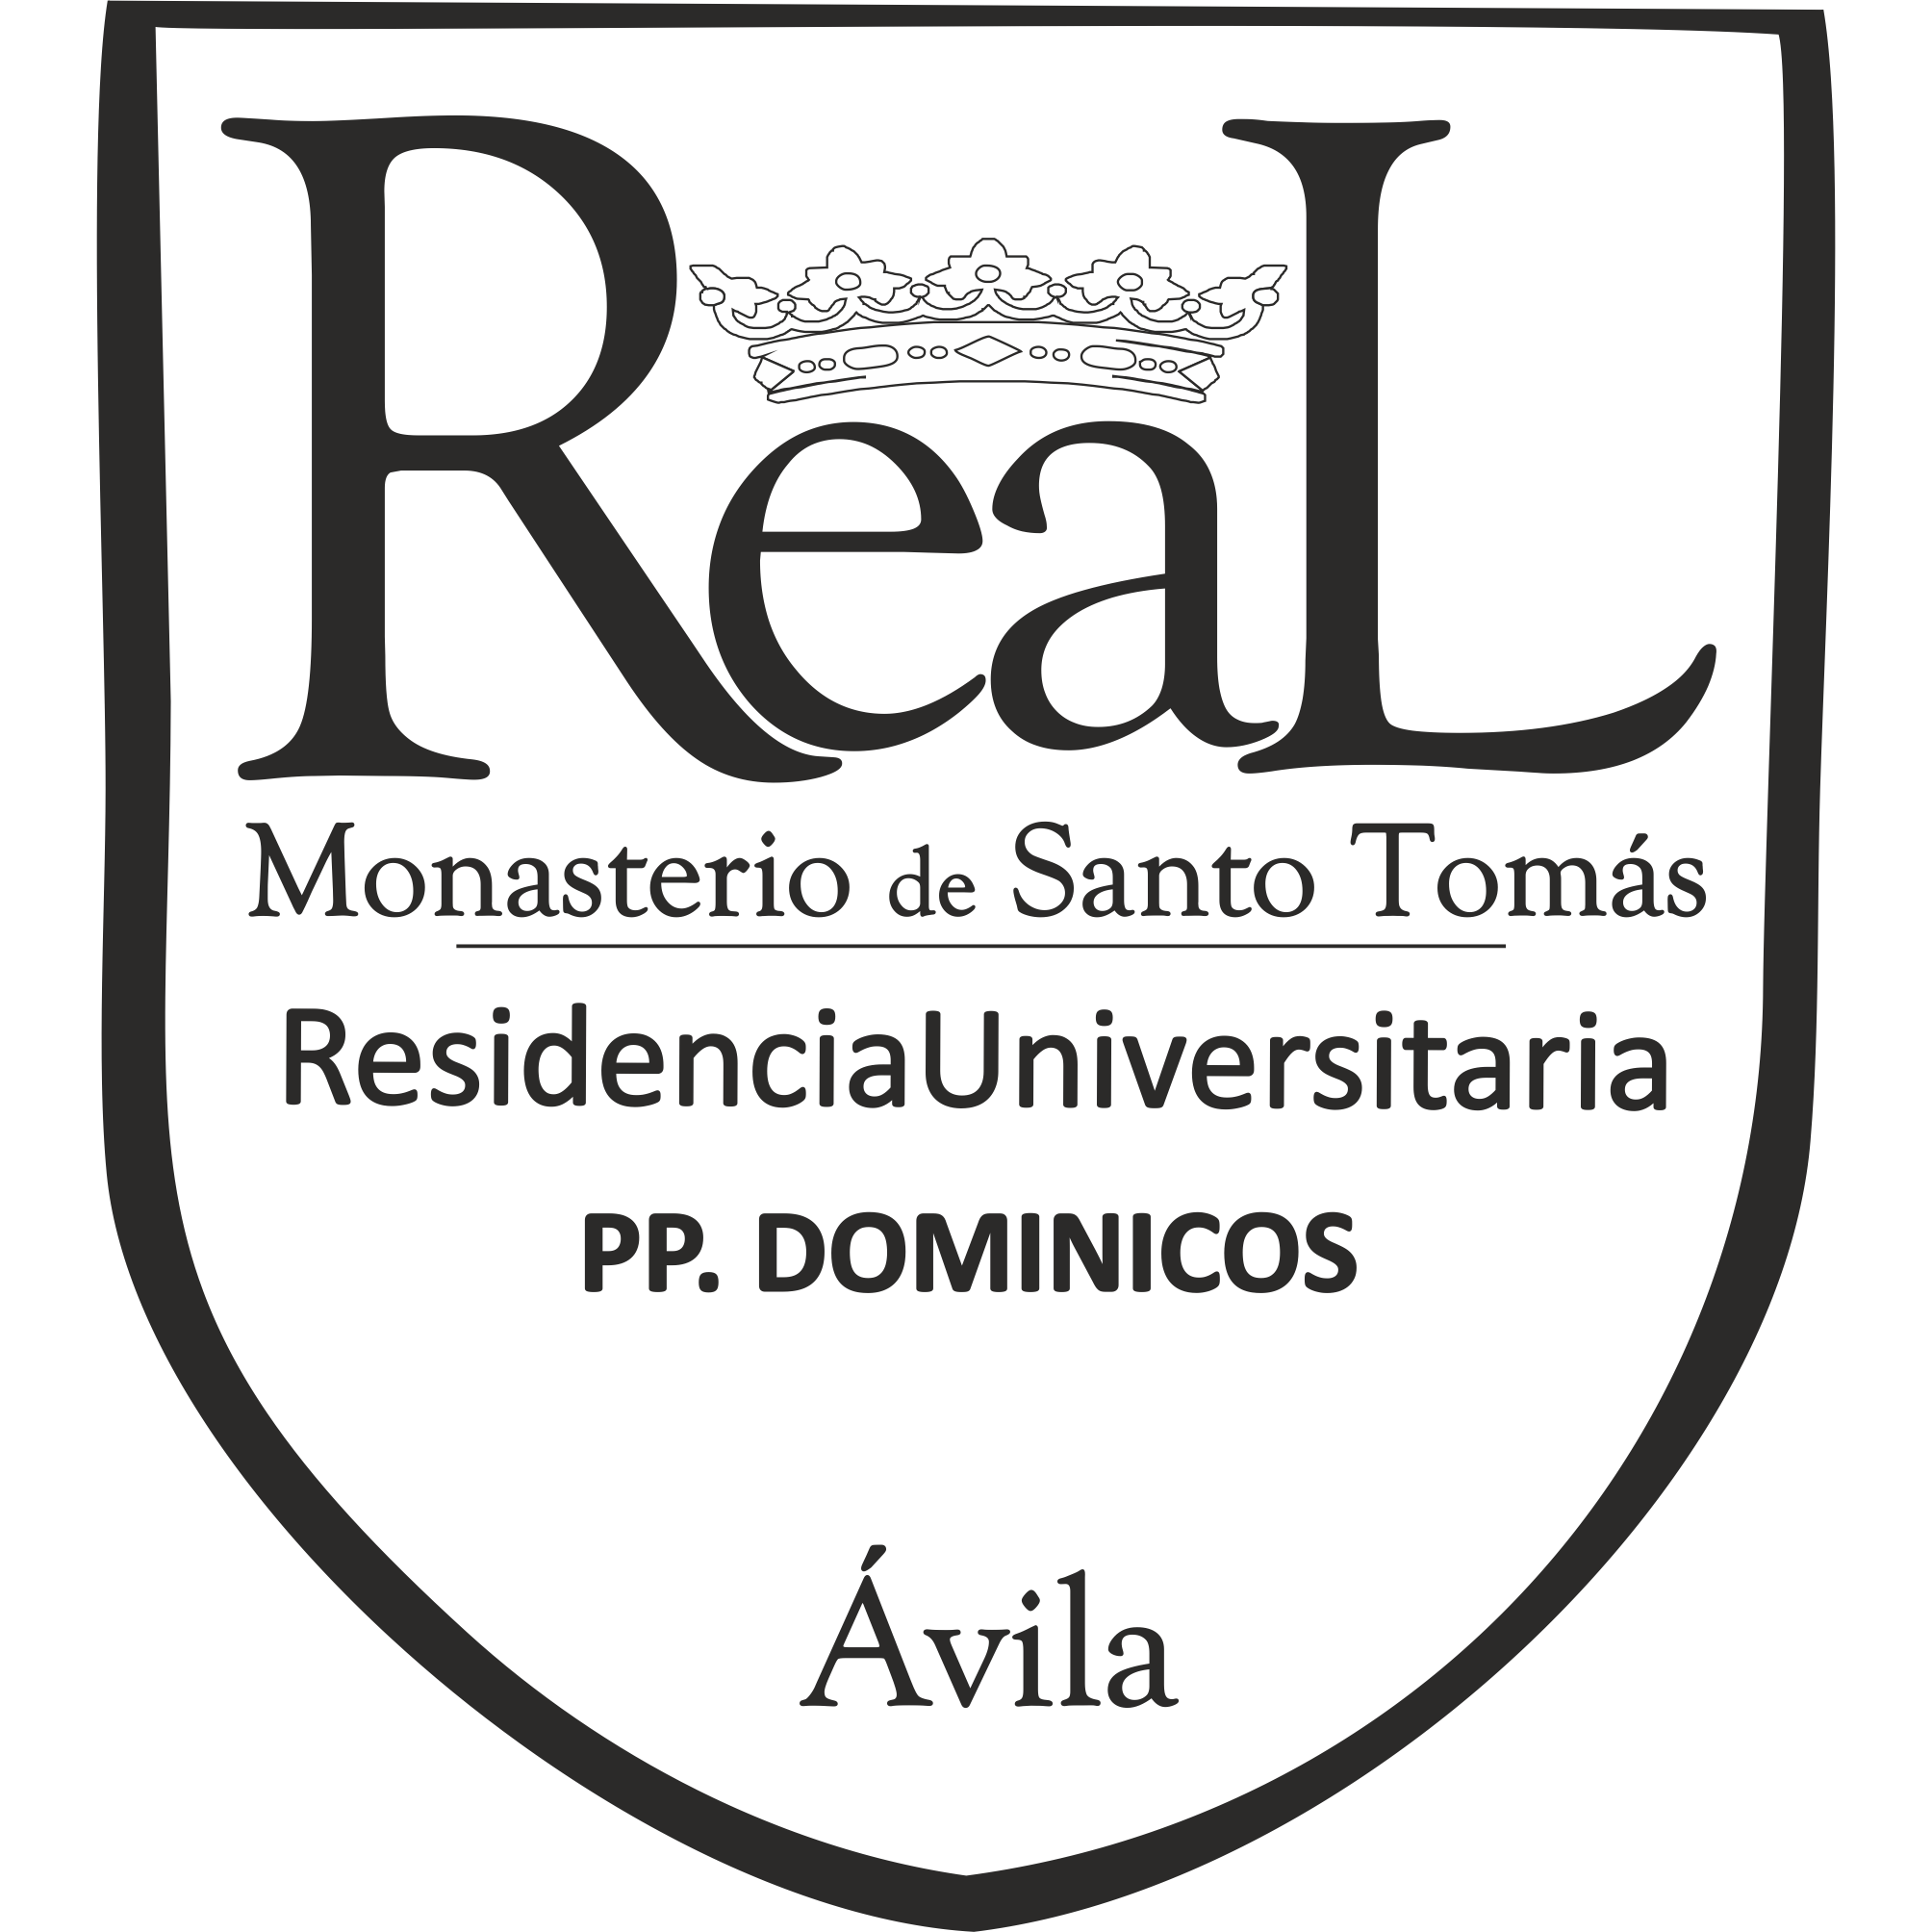 Residencia Santo Tomás - Student Housing Center - Ávila - 920 22 10 06 Spain | ShowMeLocal.com